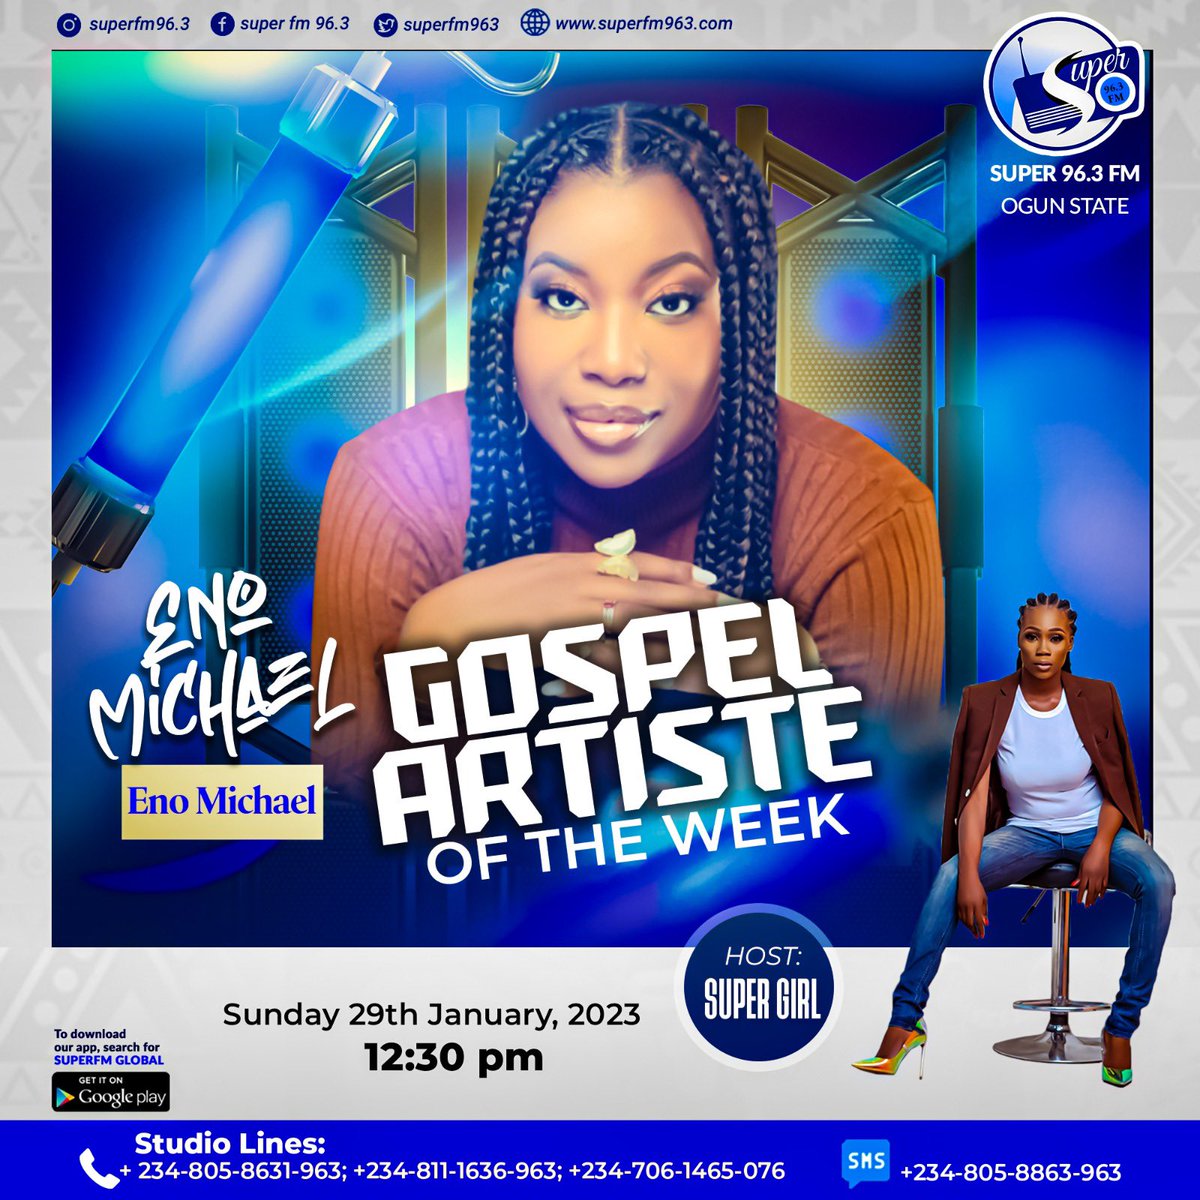 Gospel Artiste of the Week with @SGirlontheradio 

#SuperFM963 #IjebuRewa #gospelmusic #gospelartist #sunday